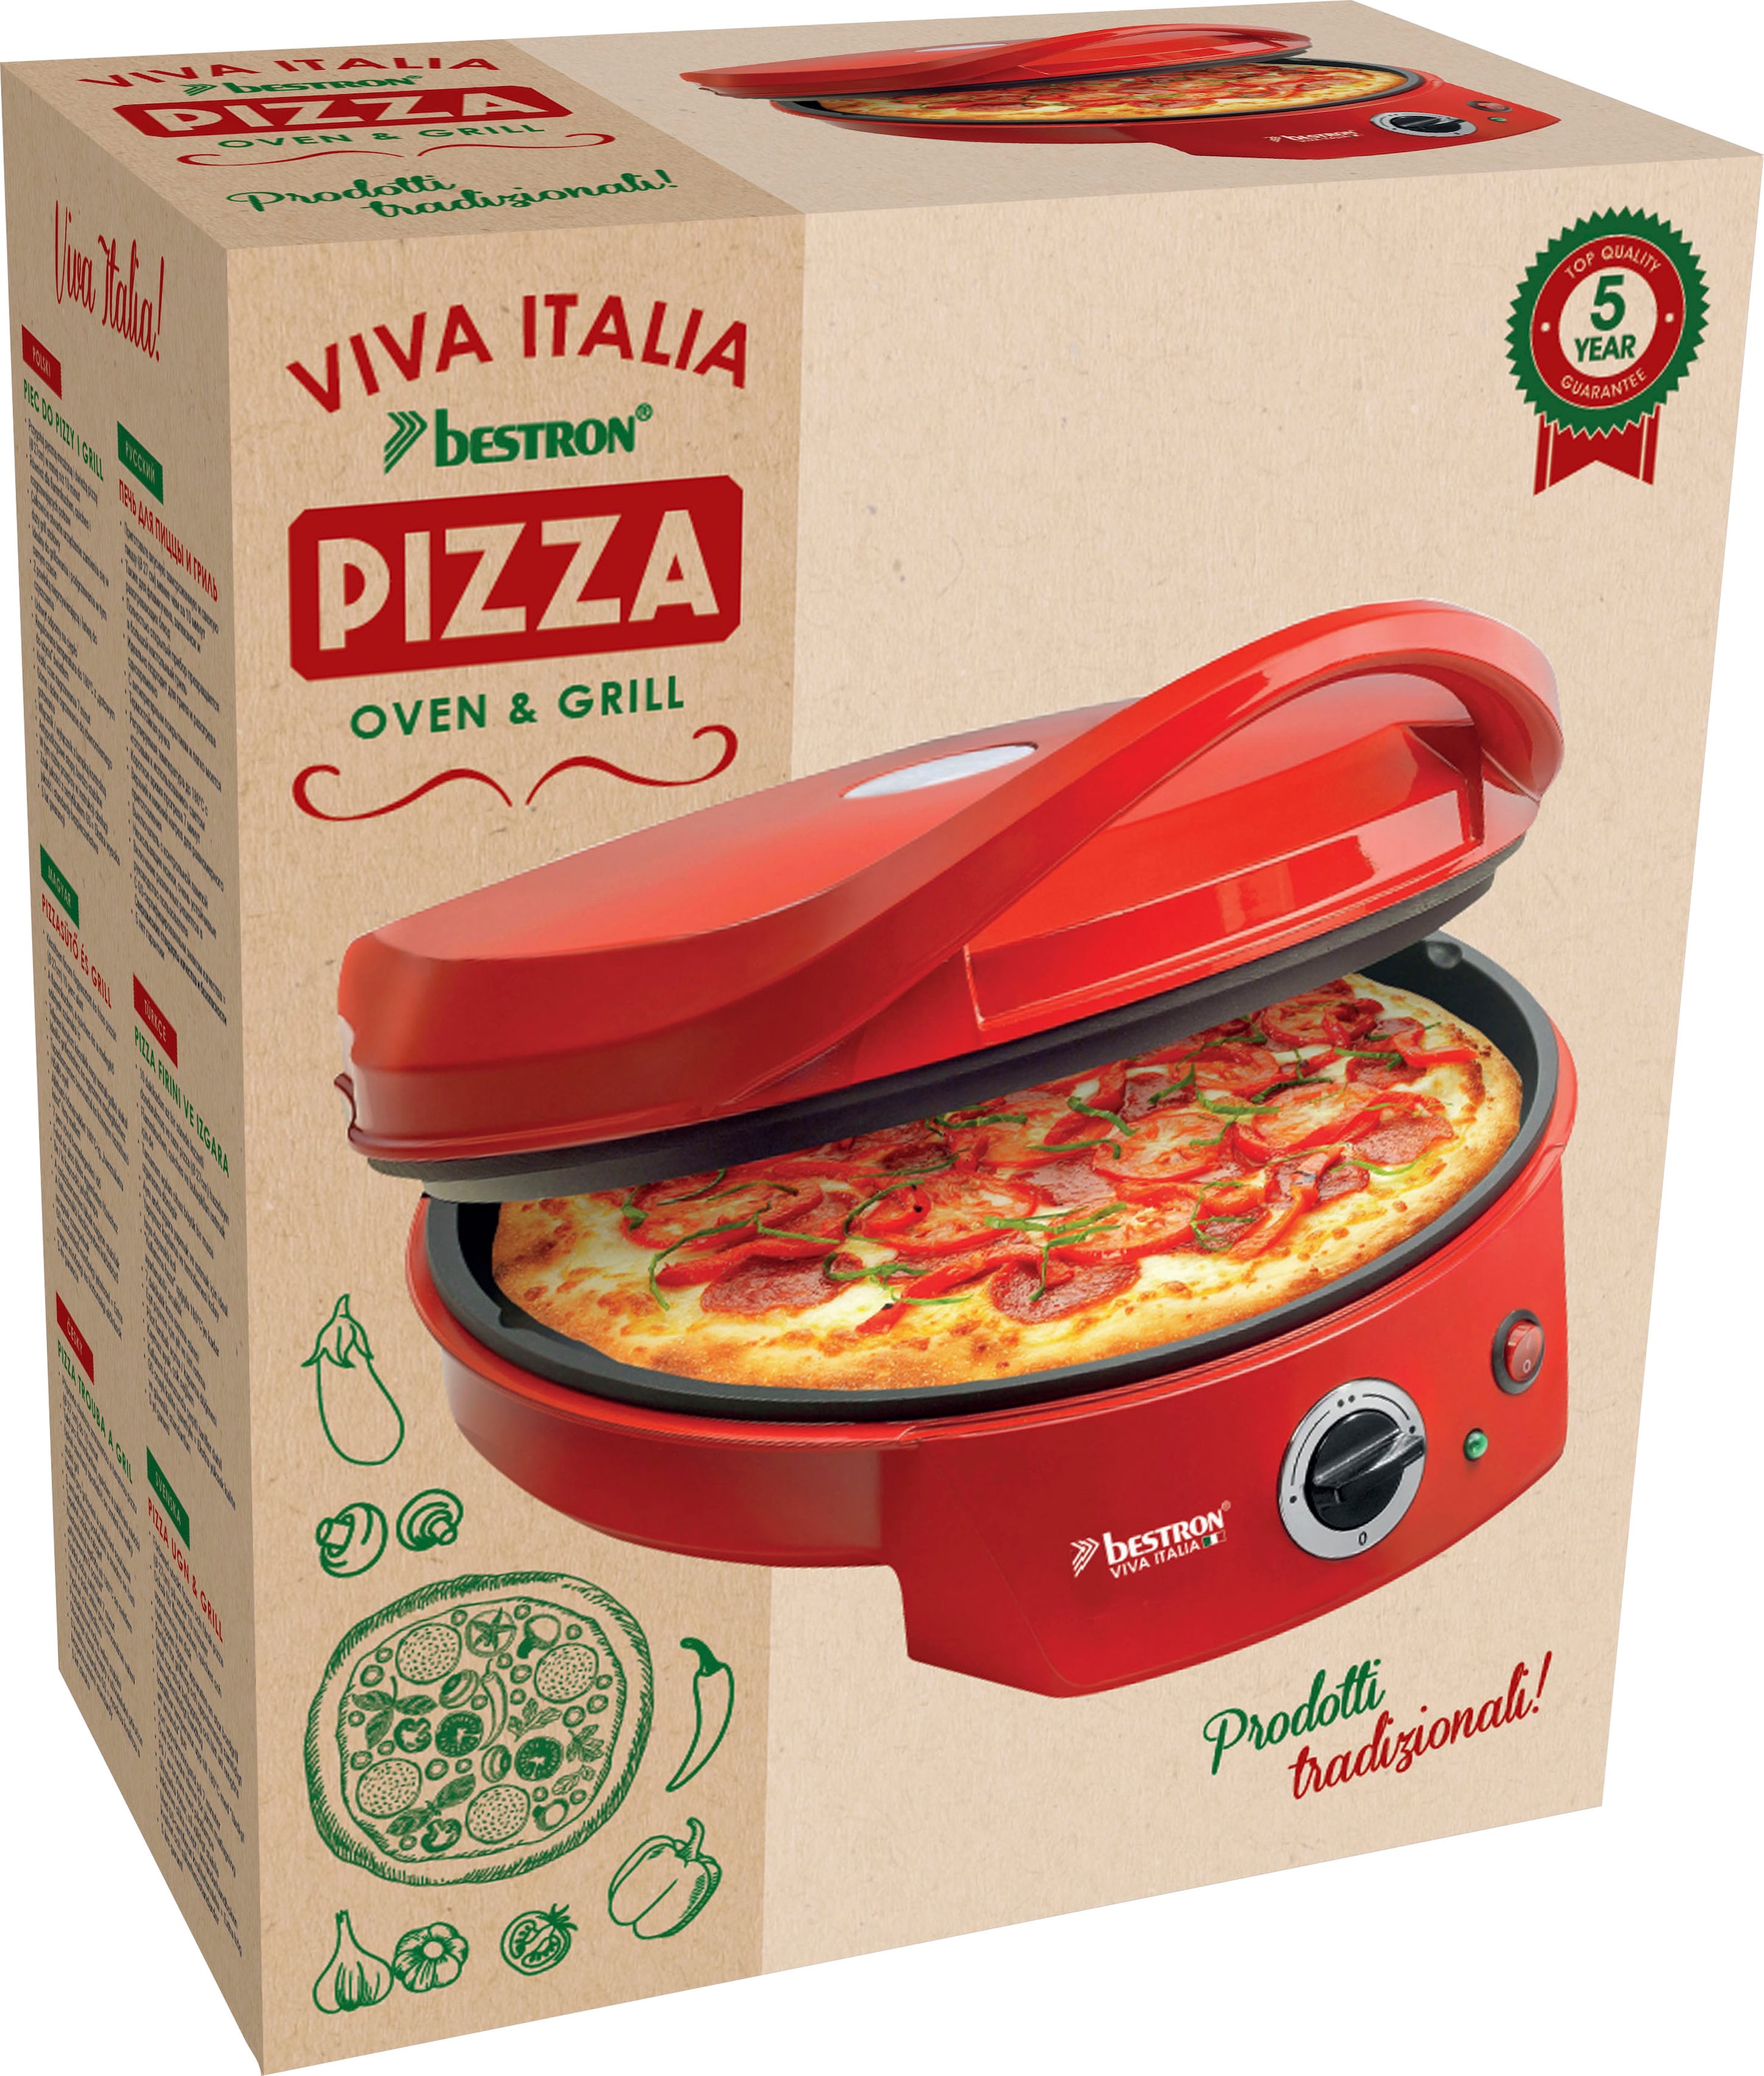 180°C, Rot OTTO Watt, »APZ400 max. 1800 Viva Italia«, Pizzaofen bei Ober-/Unterhitze, Bis bestron